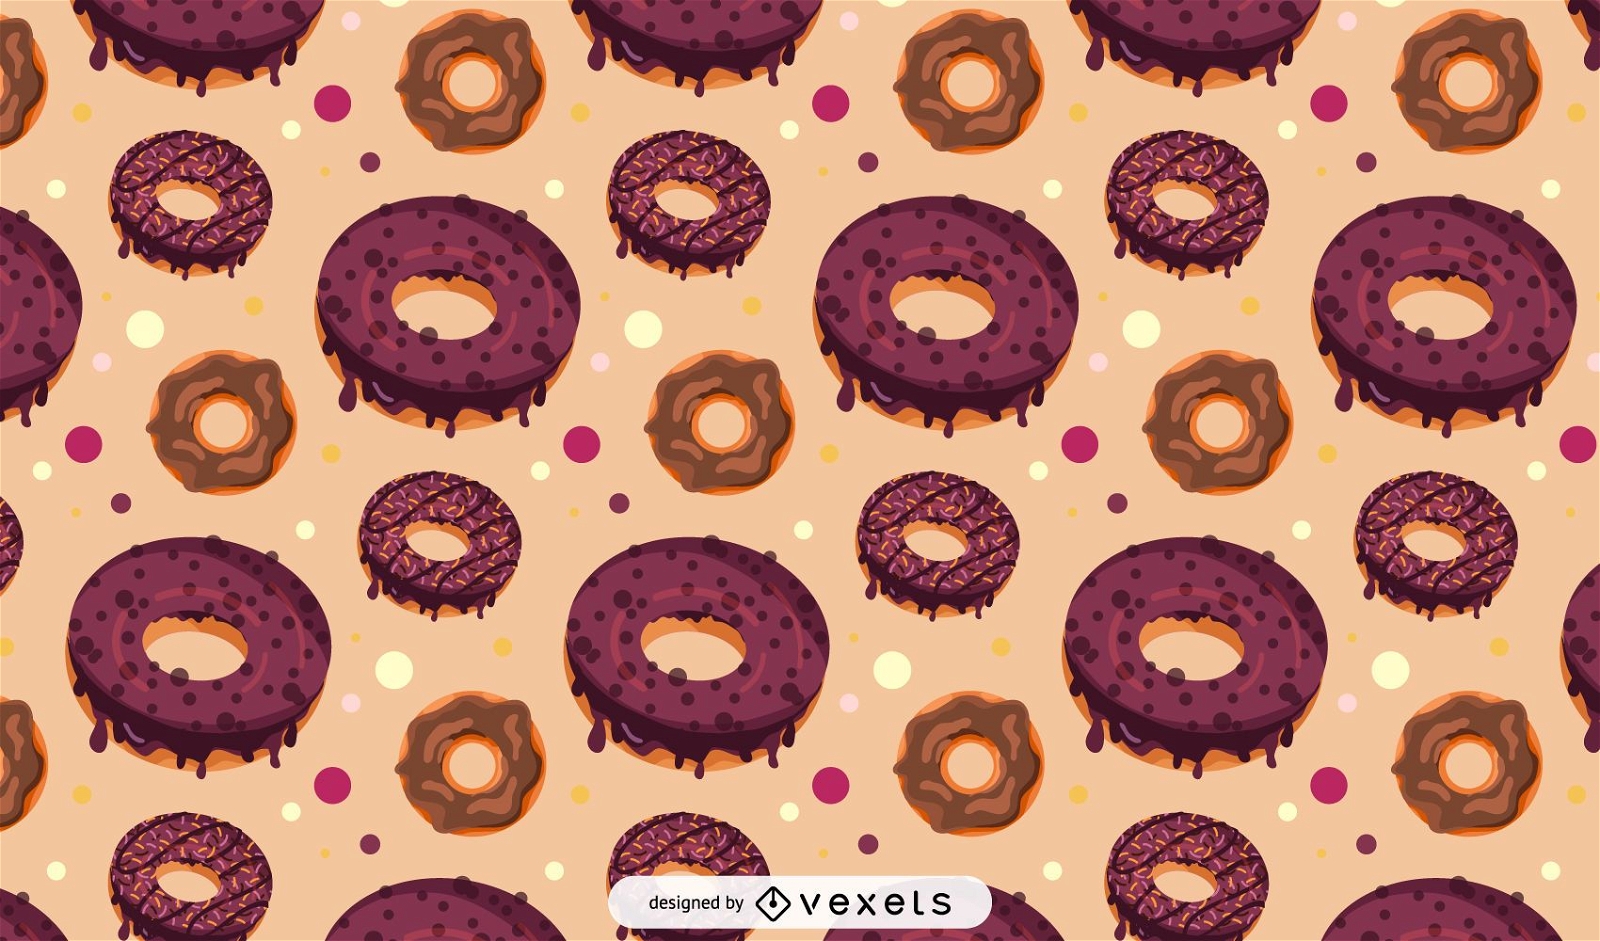 Chocolate donut pattern design